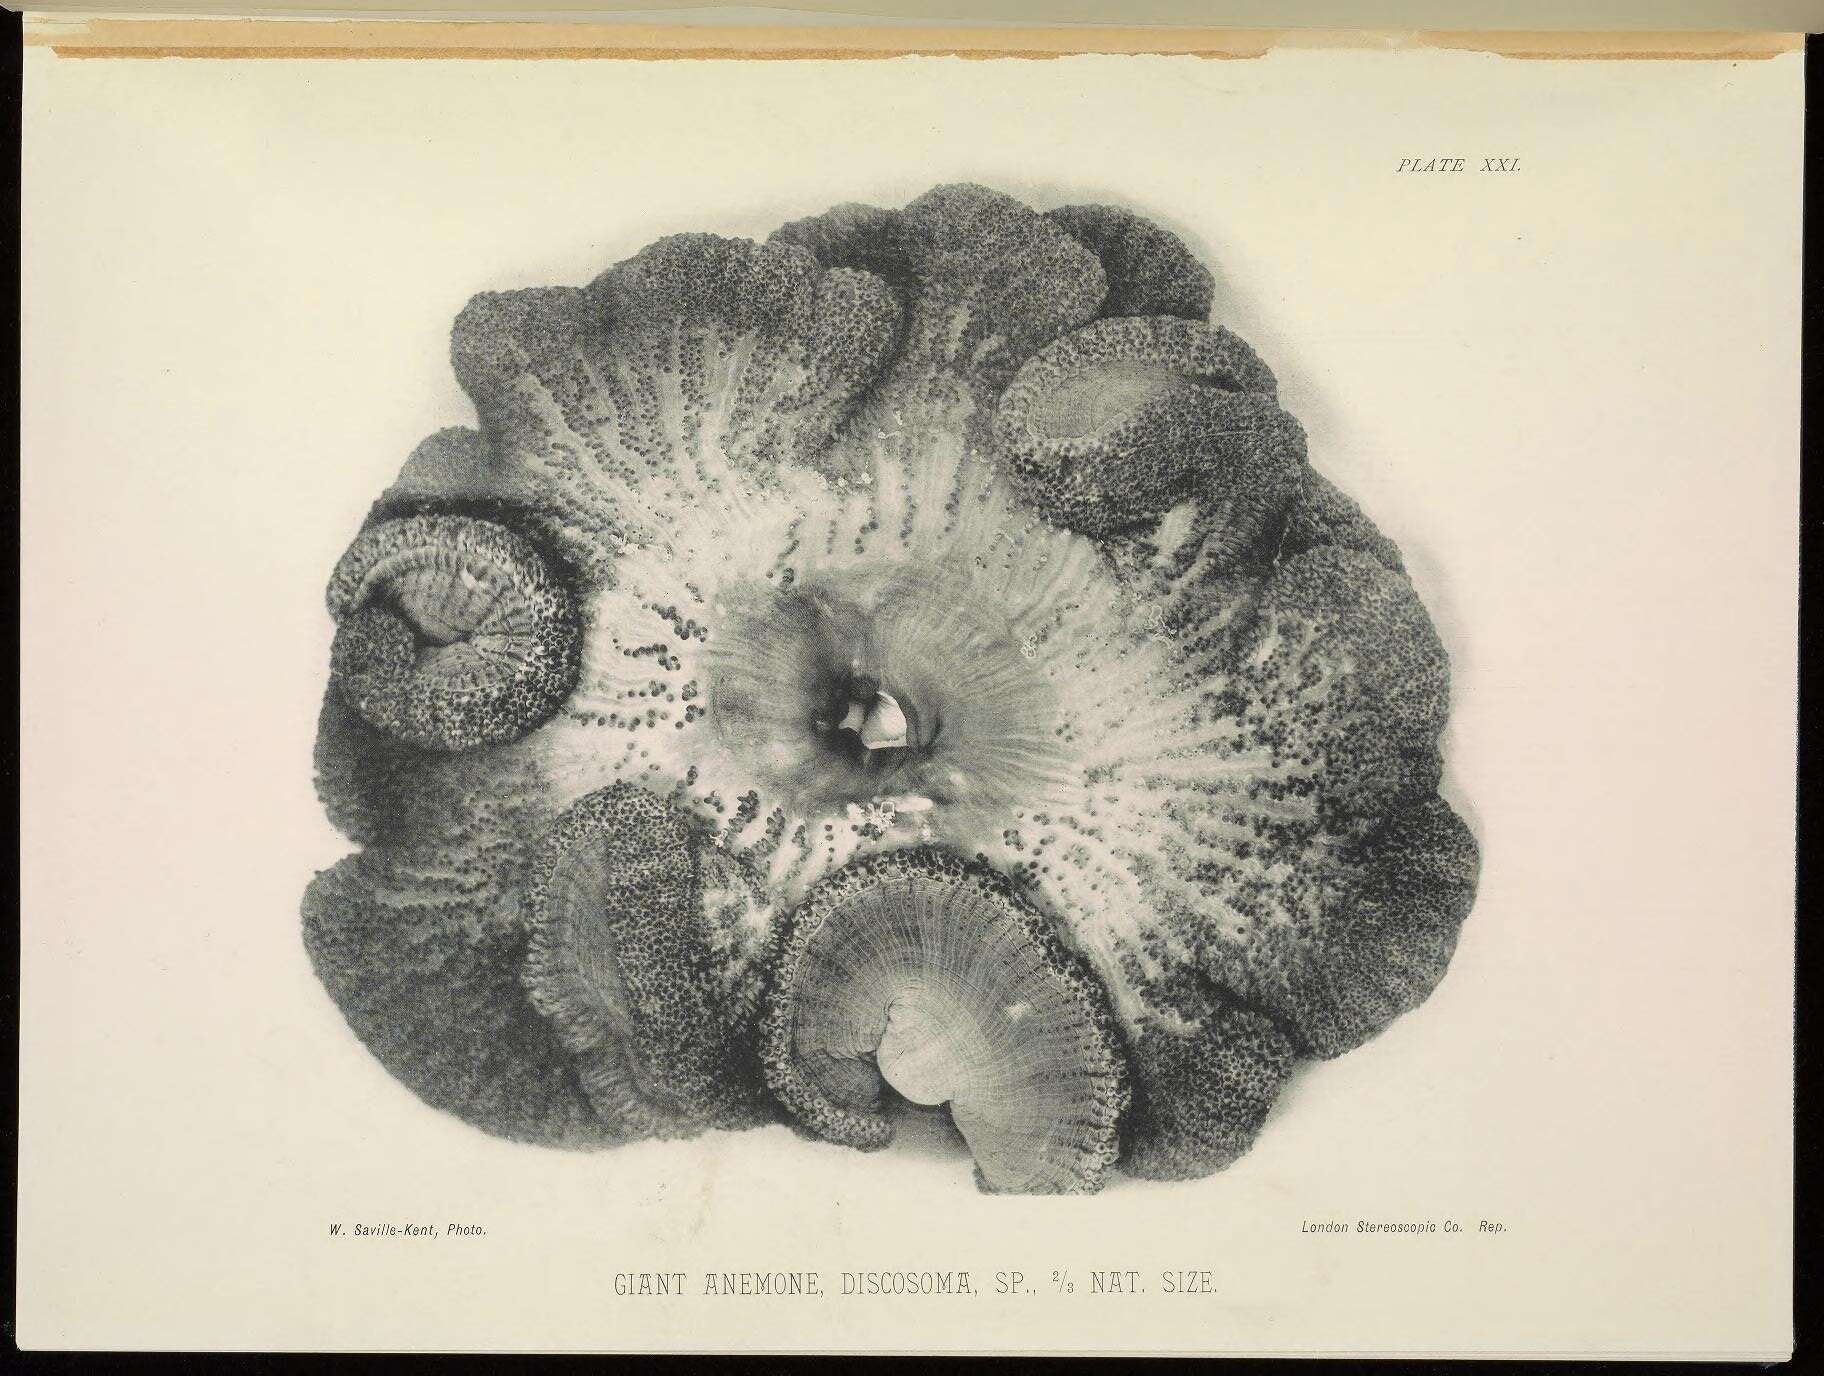 Plancia ëd Cryptodendrum Klunzinger 1877